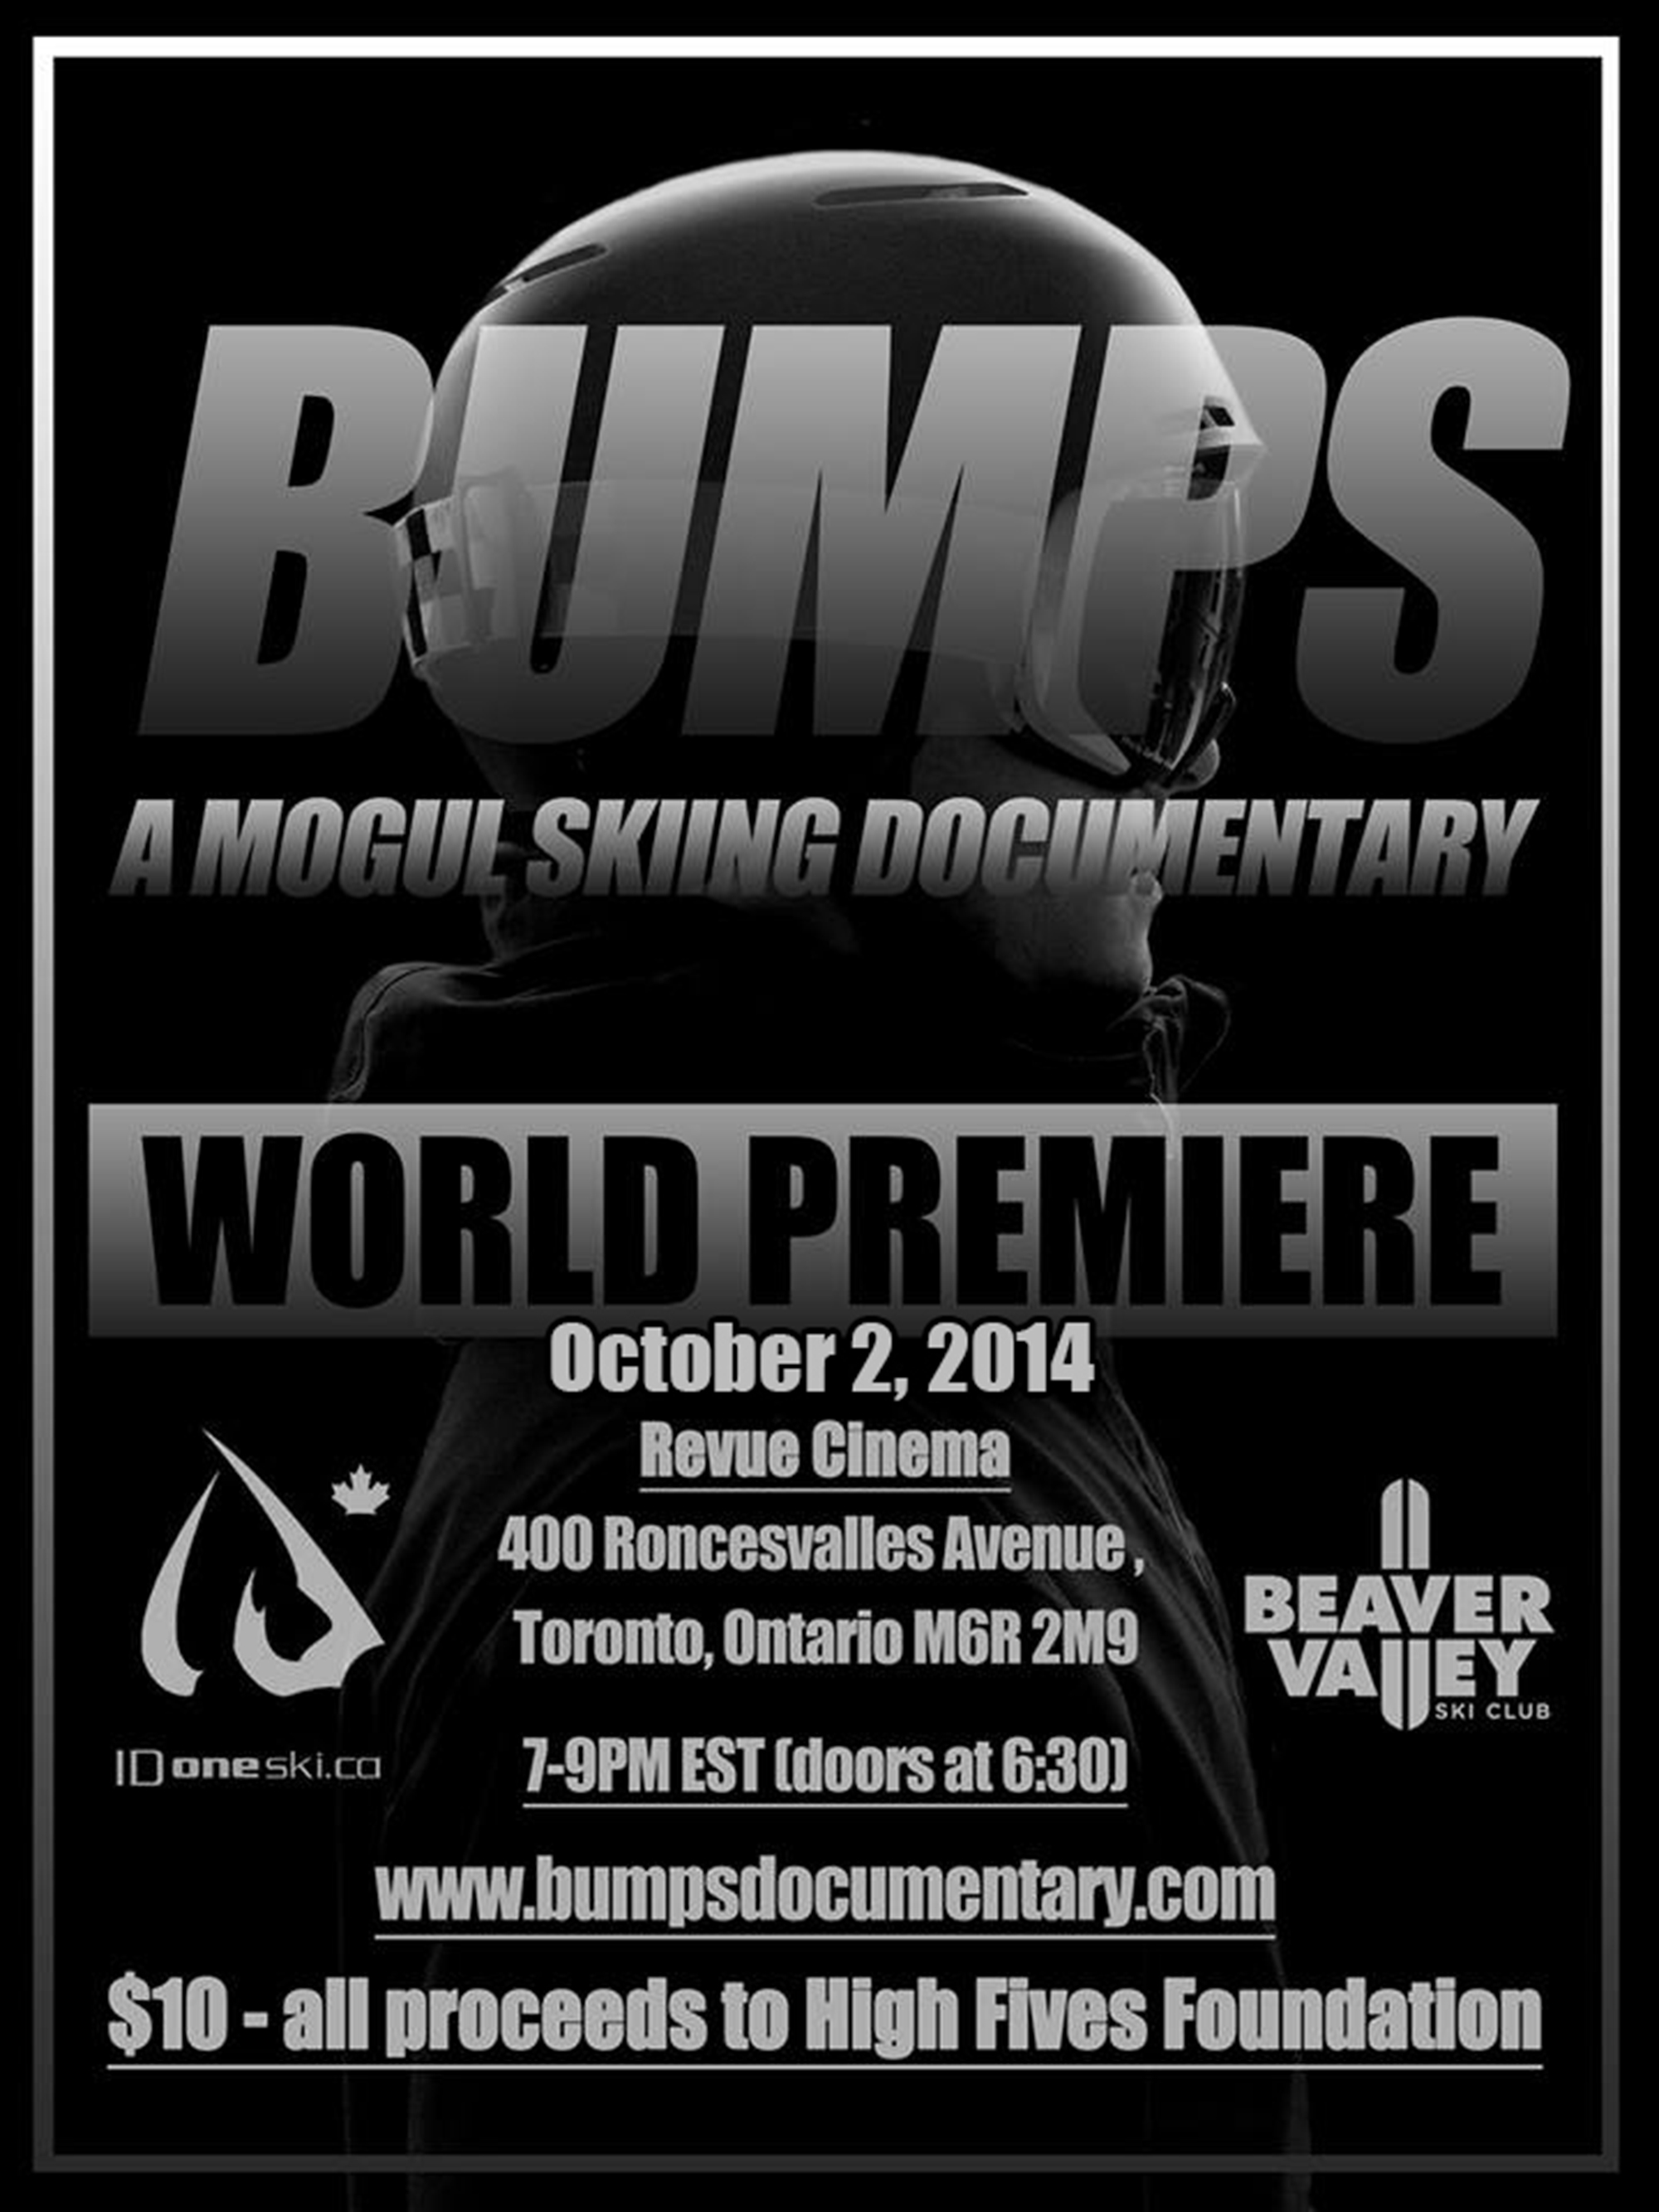 Bumps Premiere Poster 200 PPI